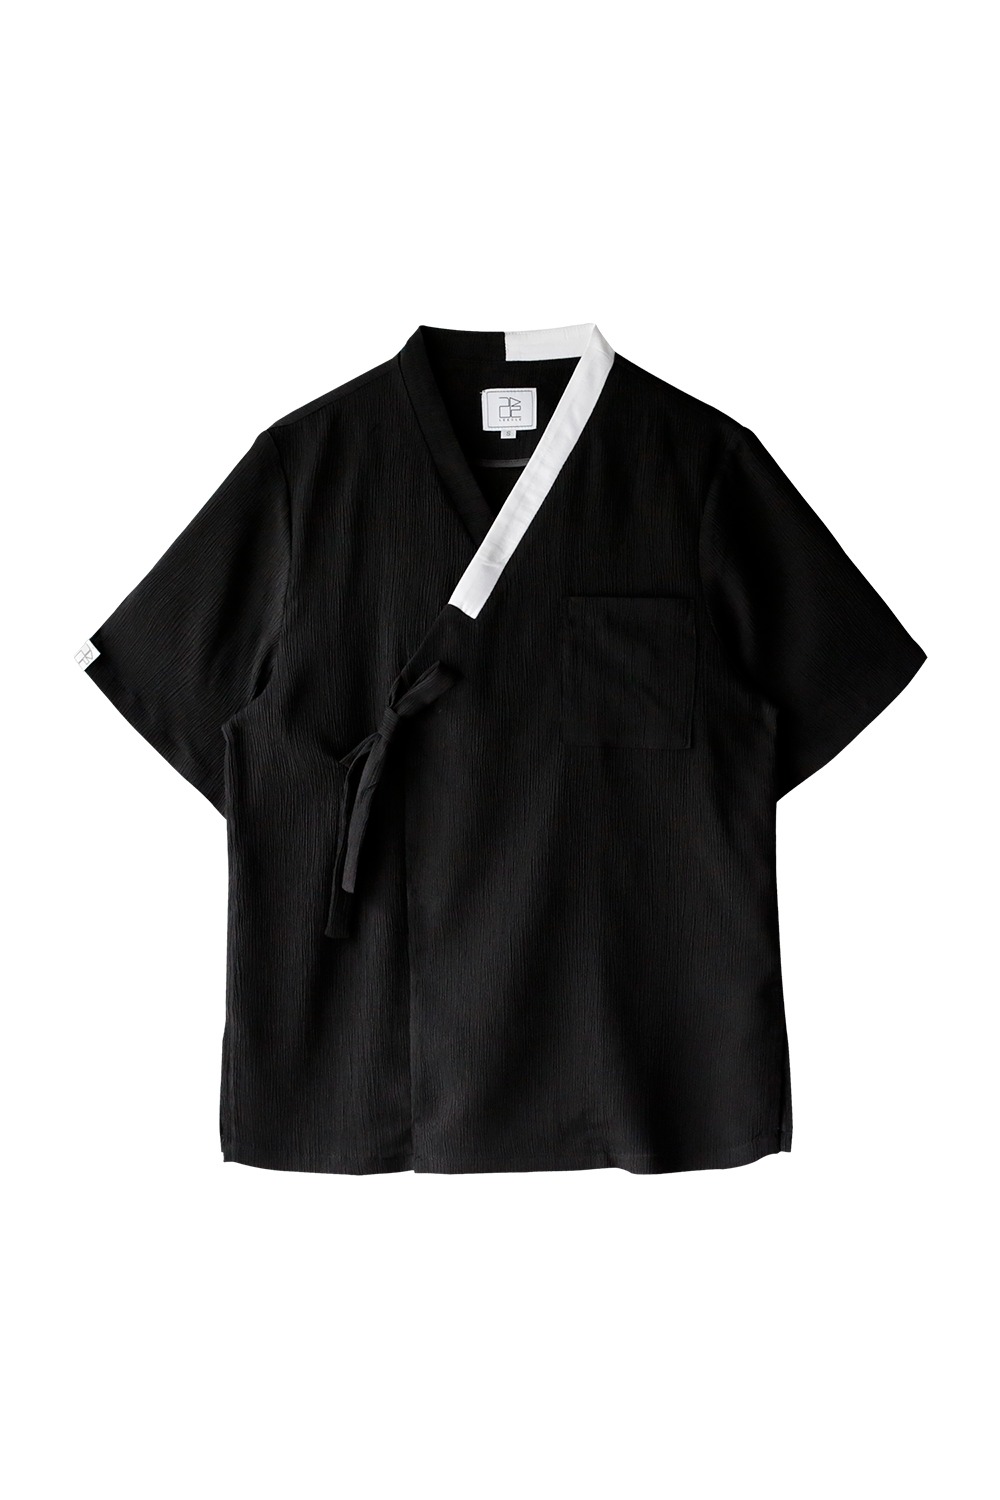 Modern Jeong Git Short-Sleeve Jeogori [Black]